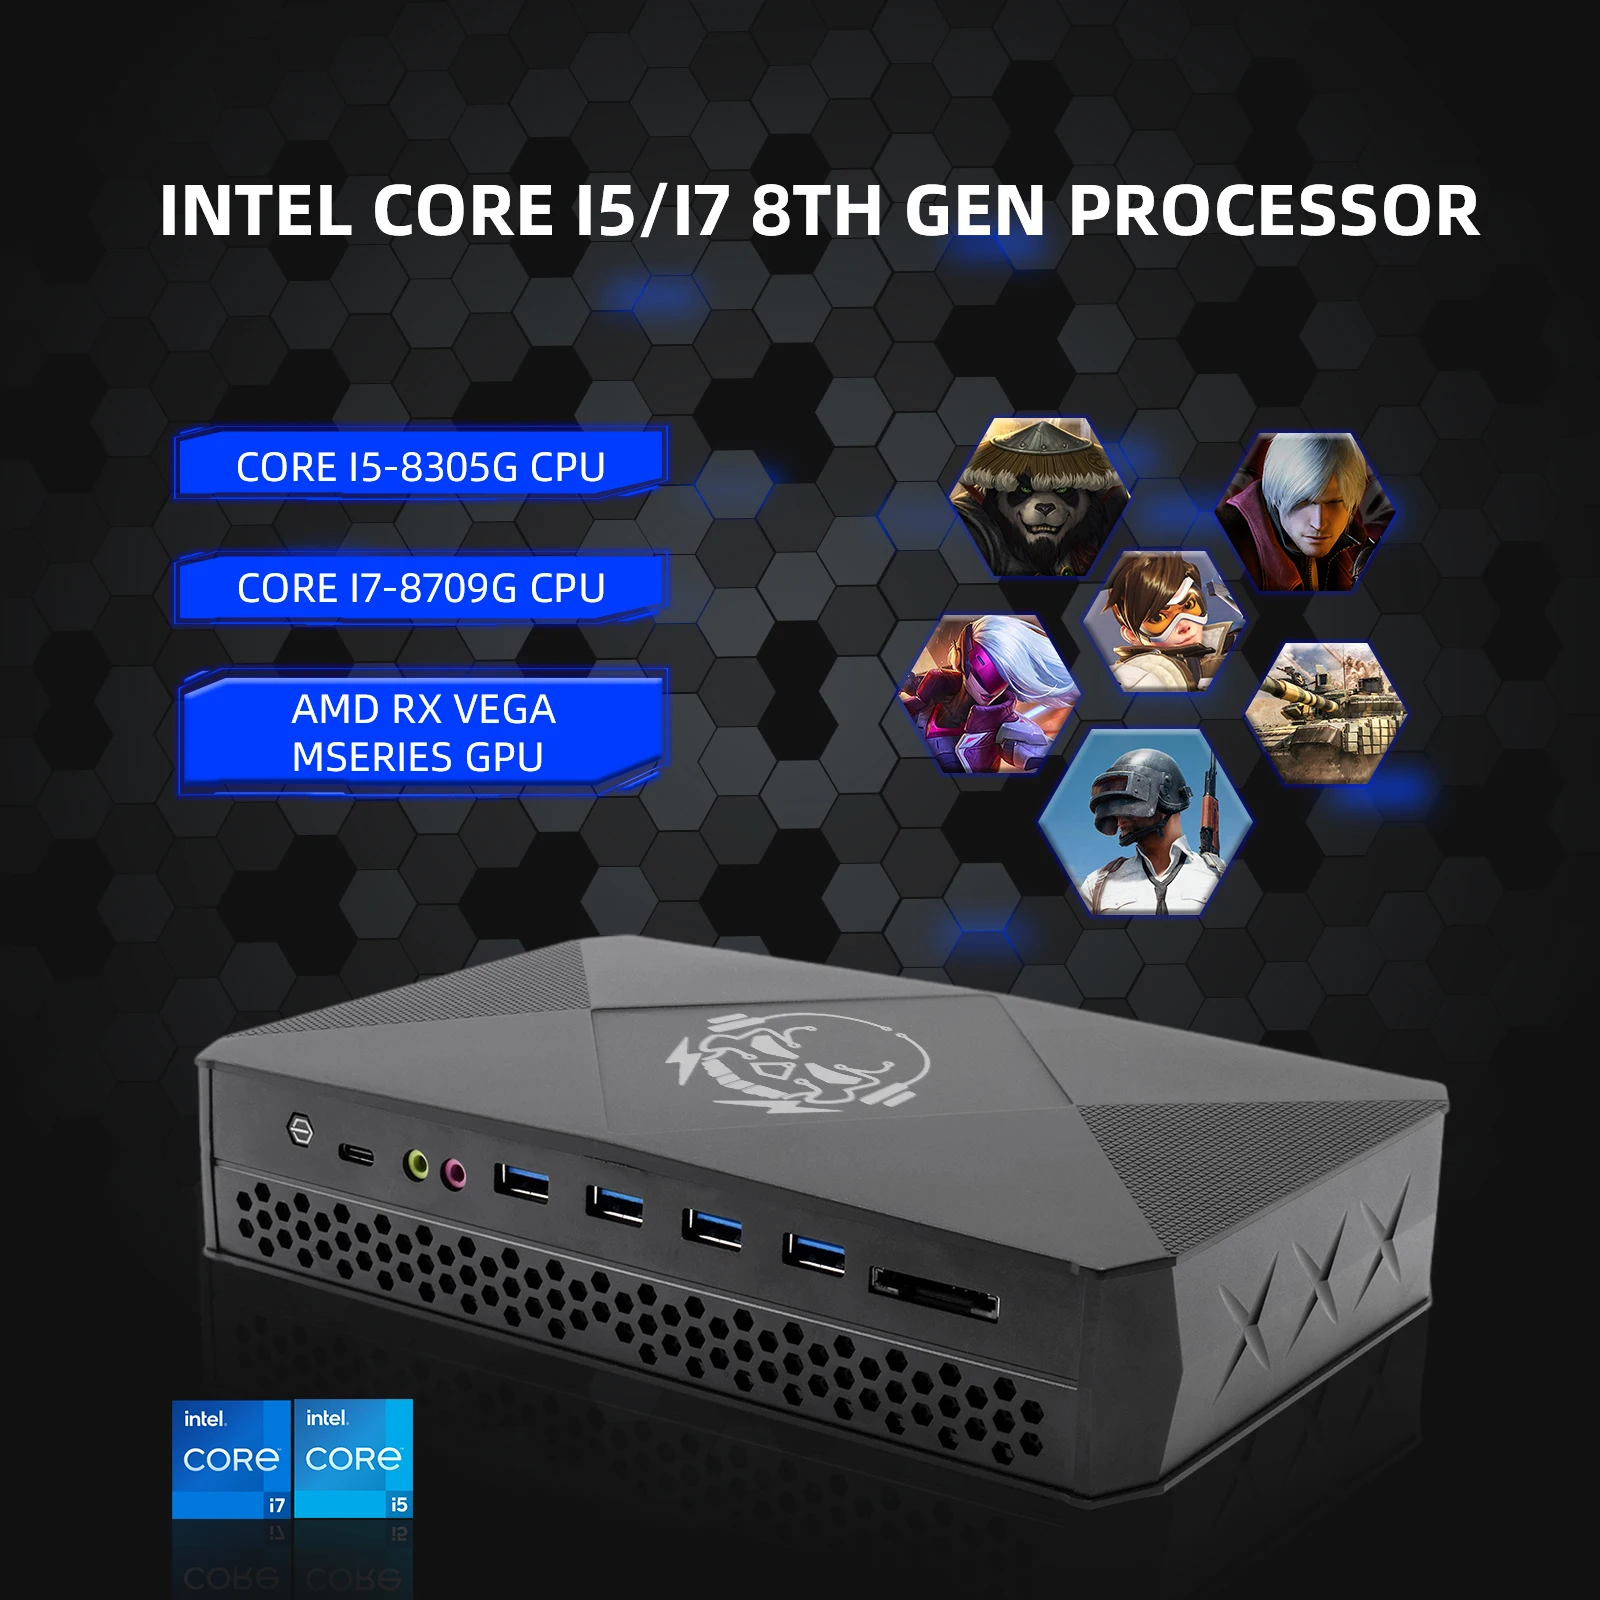 

Newest Intel Core i7 8705G i5 8305G Win10pro Linux Core i7 8709G gamer Mini PC Nuc 2*HDMI 2.0 Type-C powerful computer m.2 WIFI